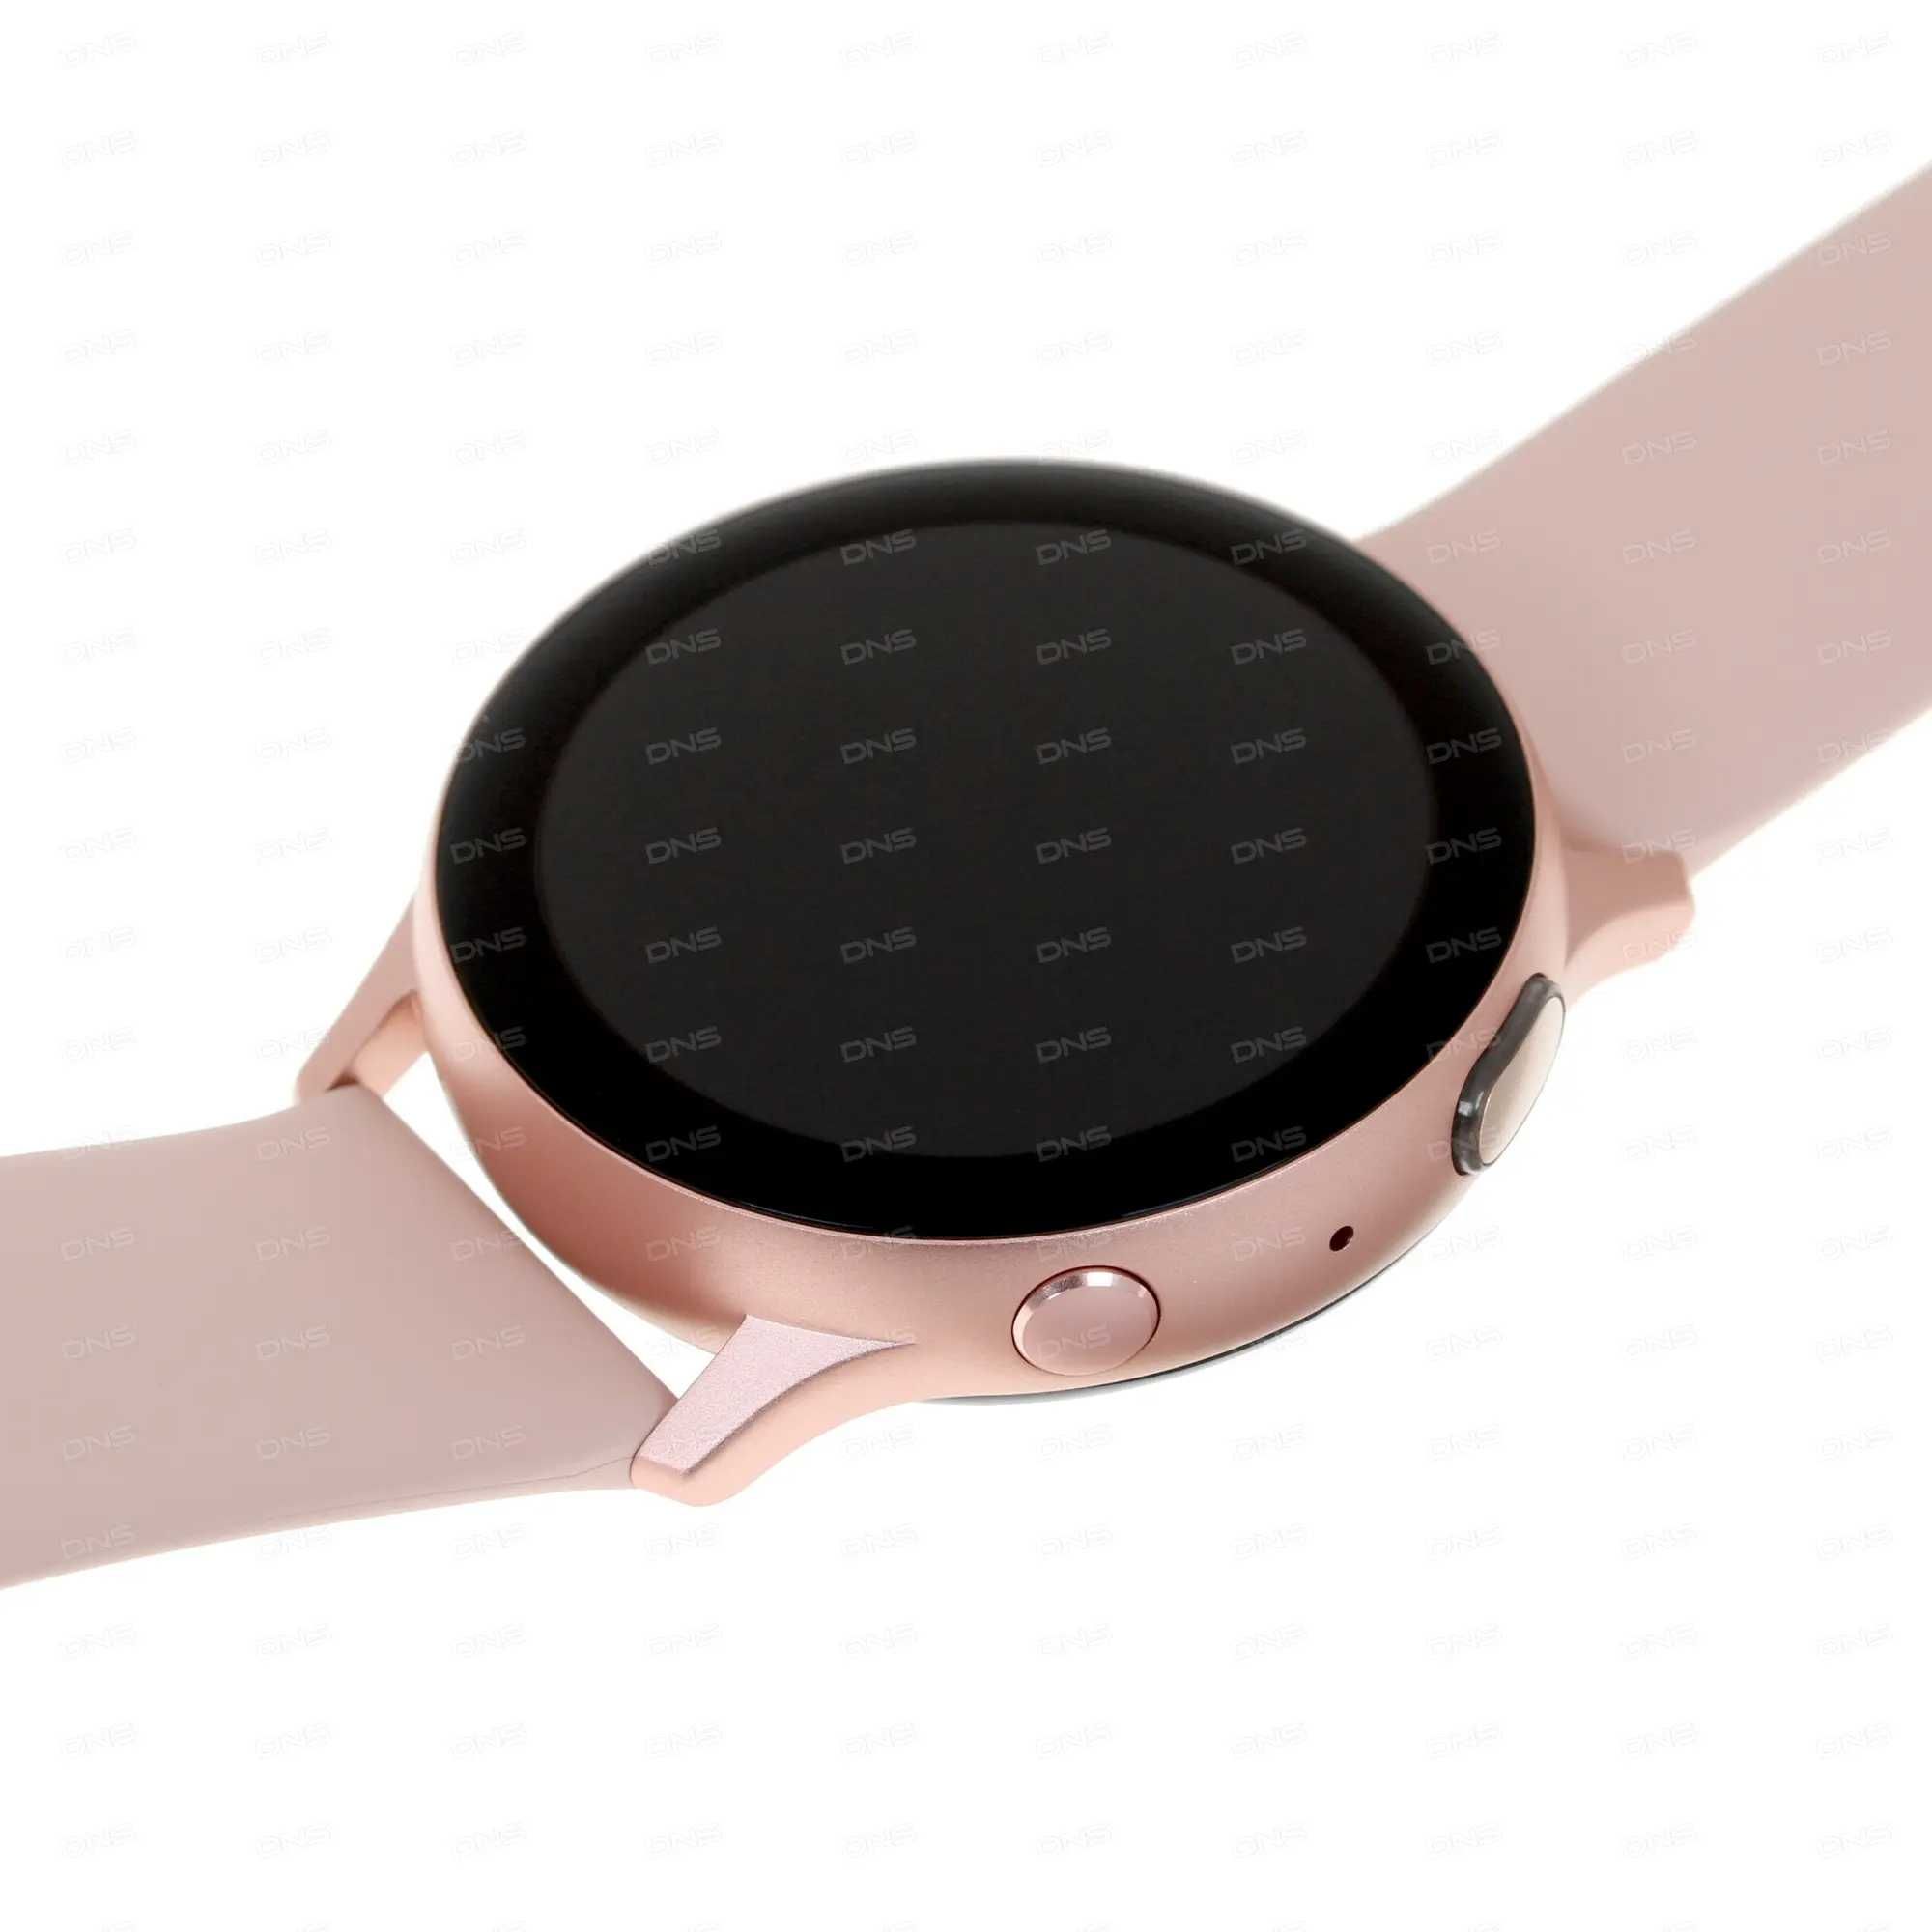 Samsung Galaxy watch Activ 2-44ml часы сағат